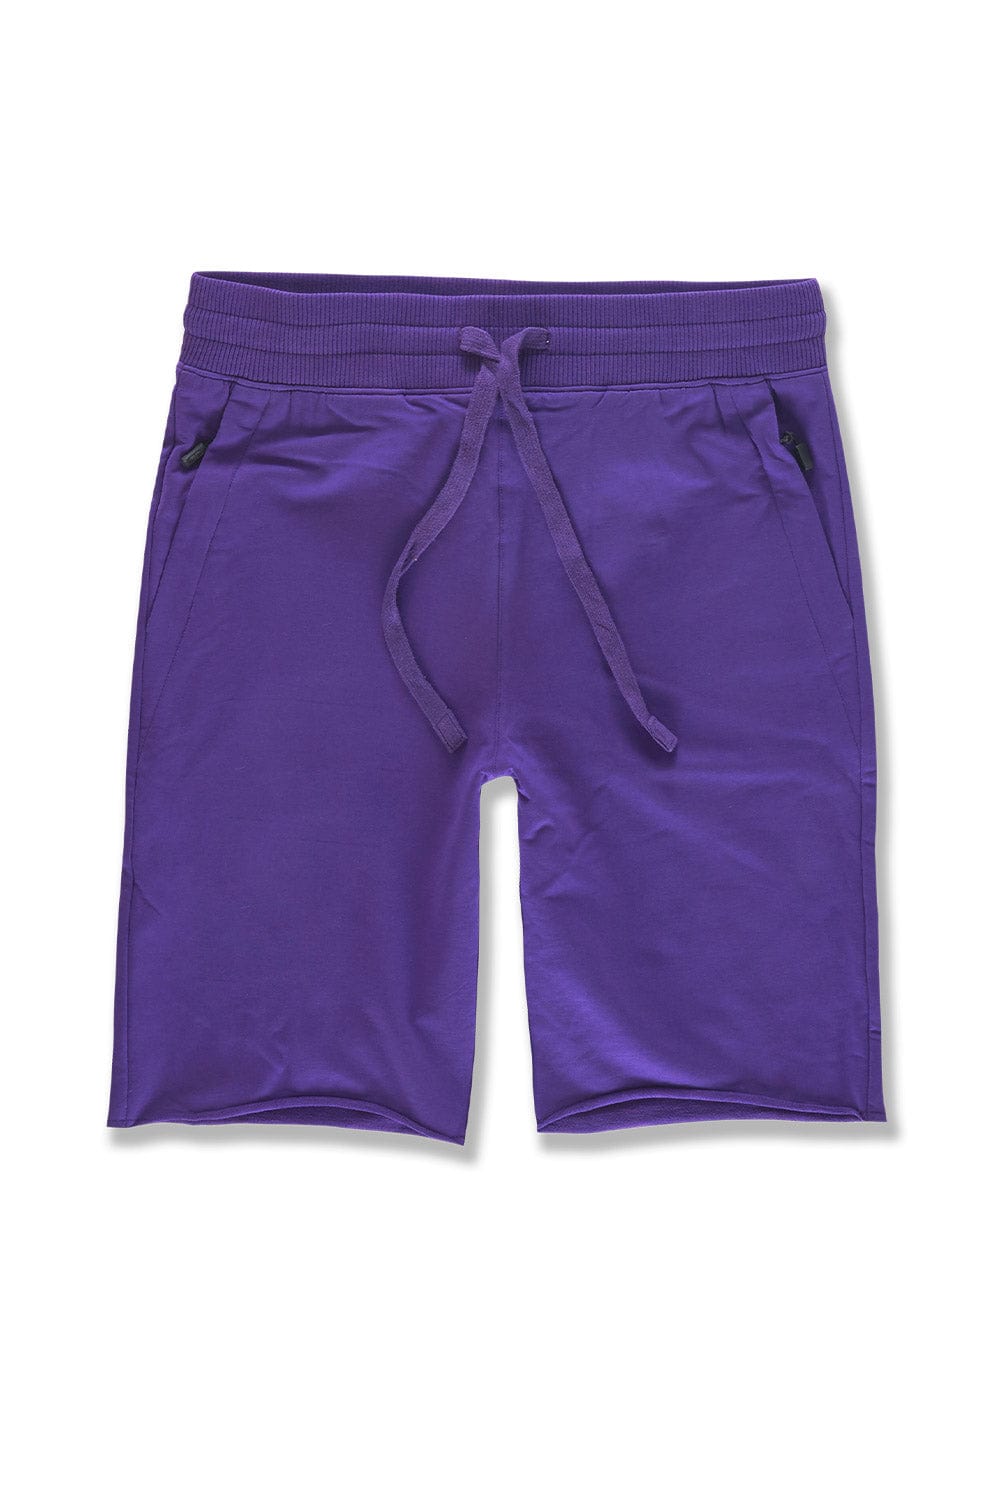 Jordan Craig OG - Palma French Terry Shorts Purple / S